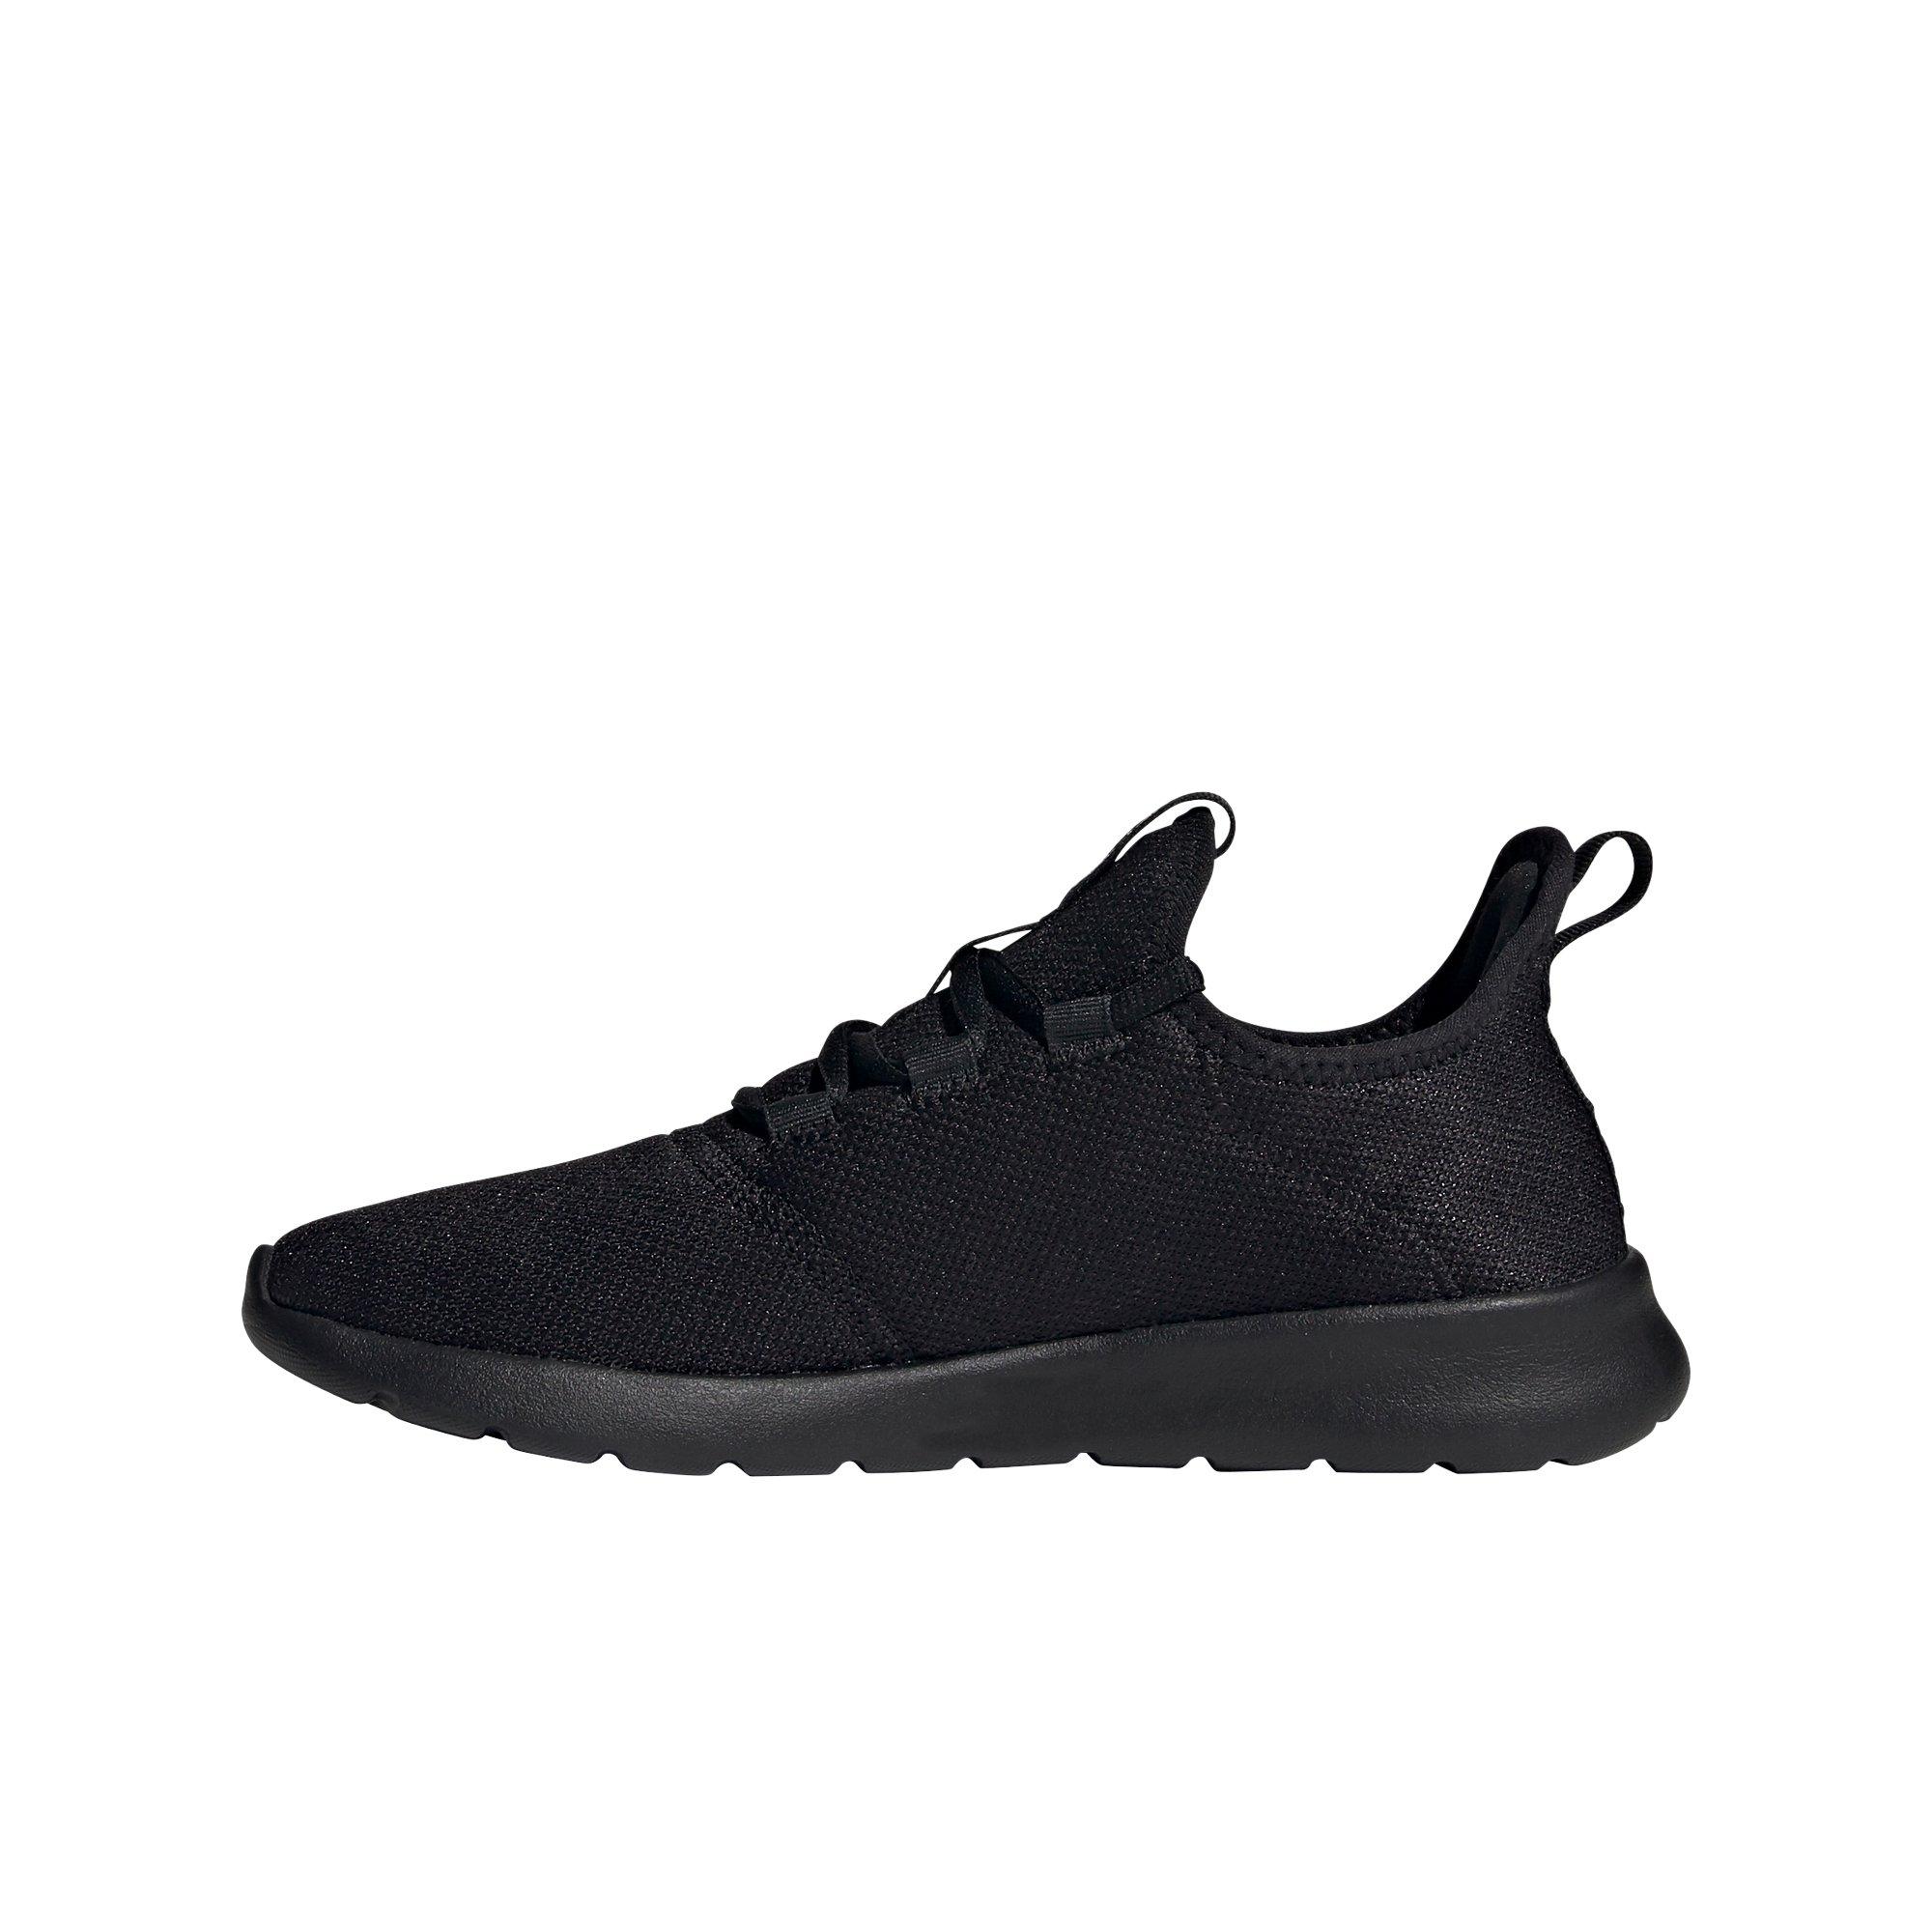 Definitivo Deliberar filosofía adidas Cloudfoam Pure 2.0 "Core Black" Women's Running Shoe